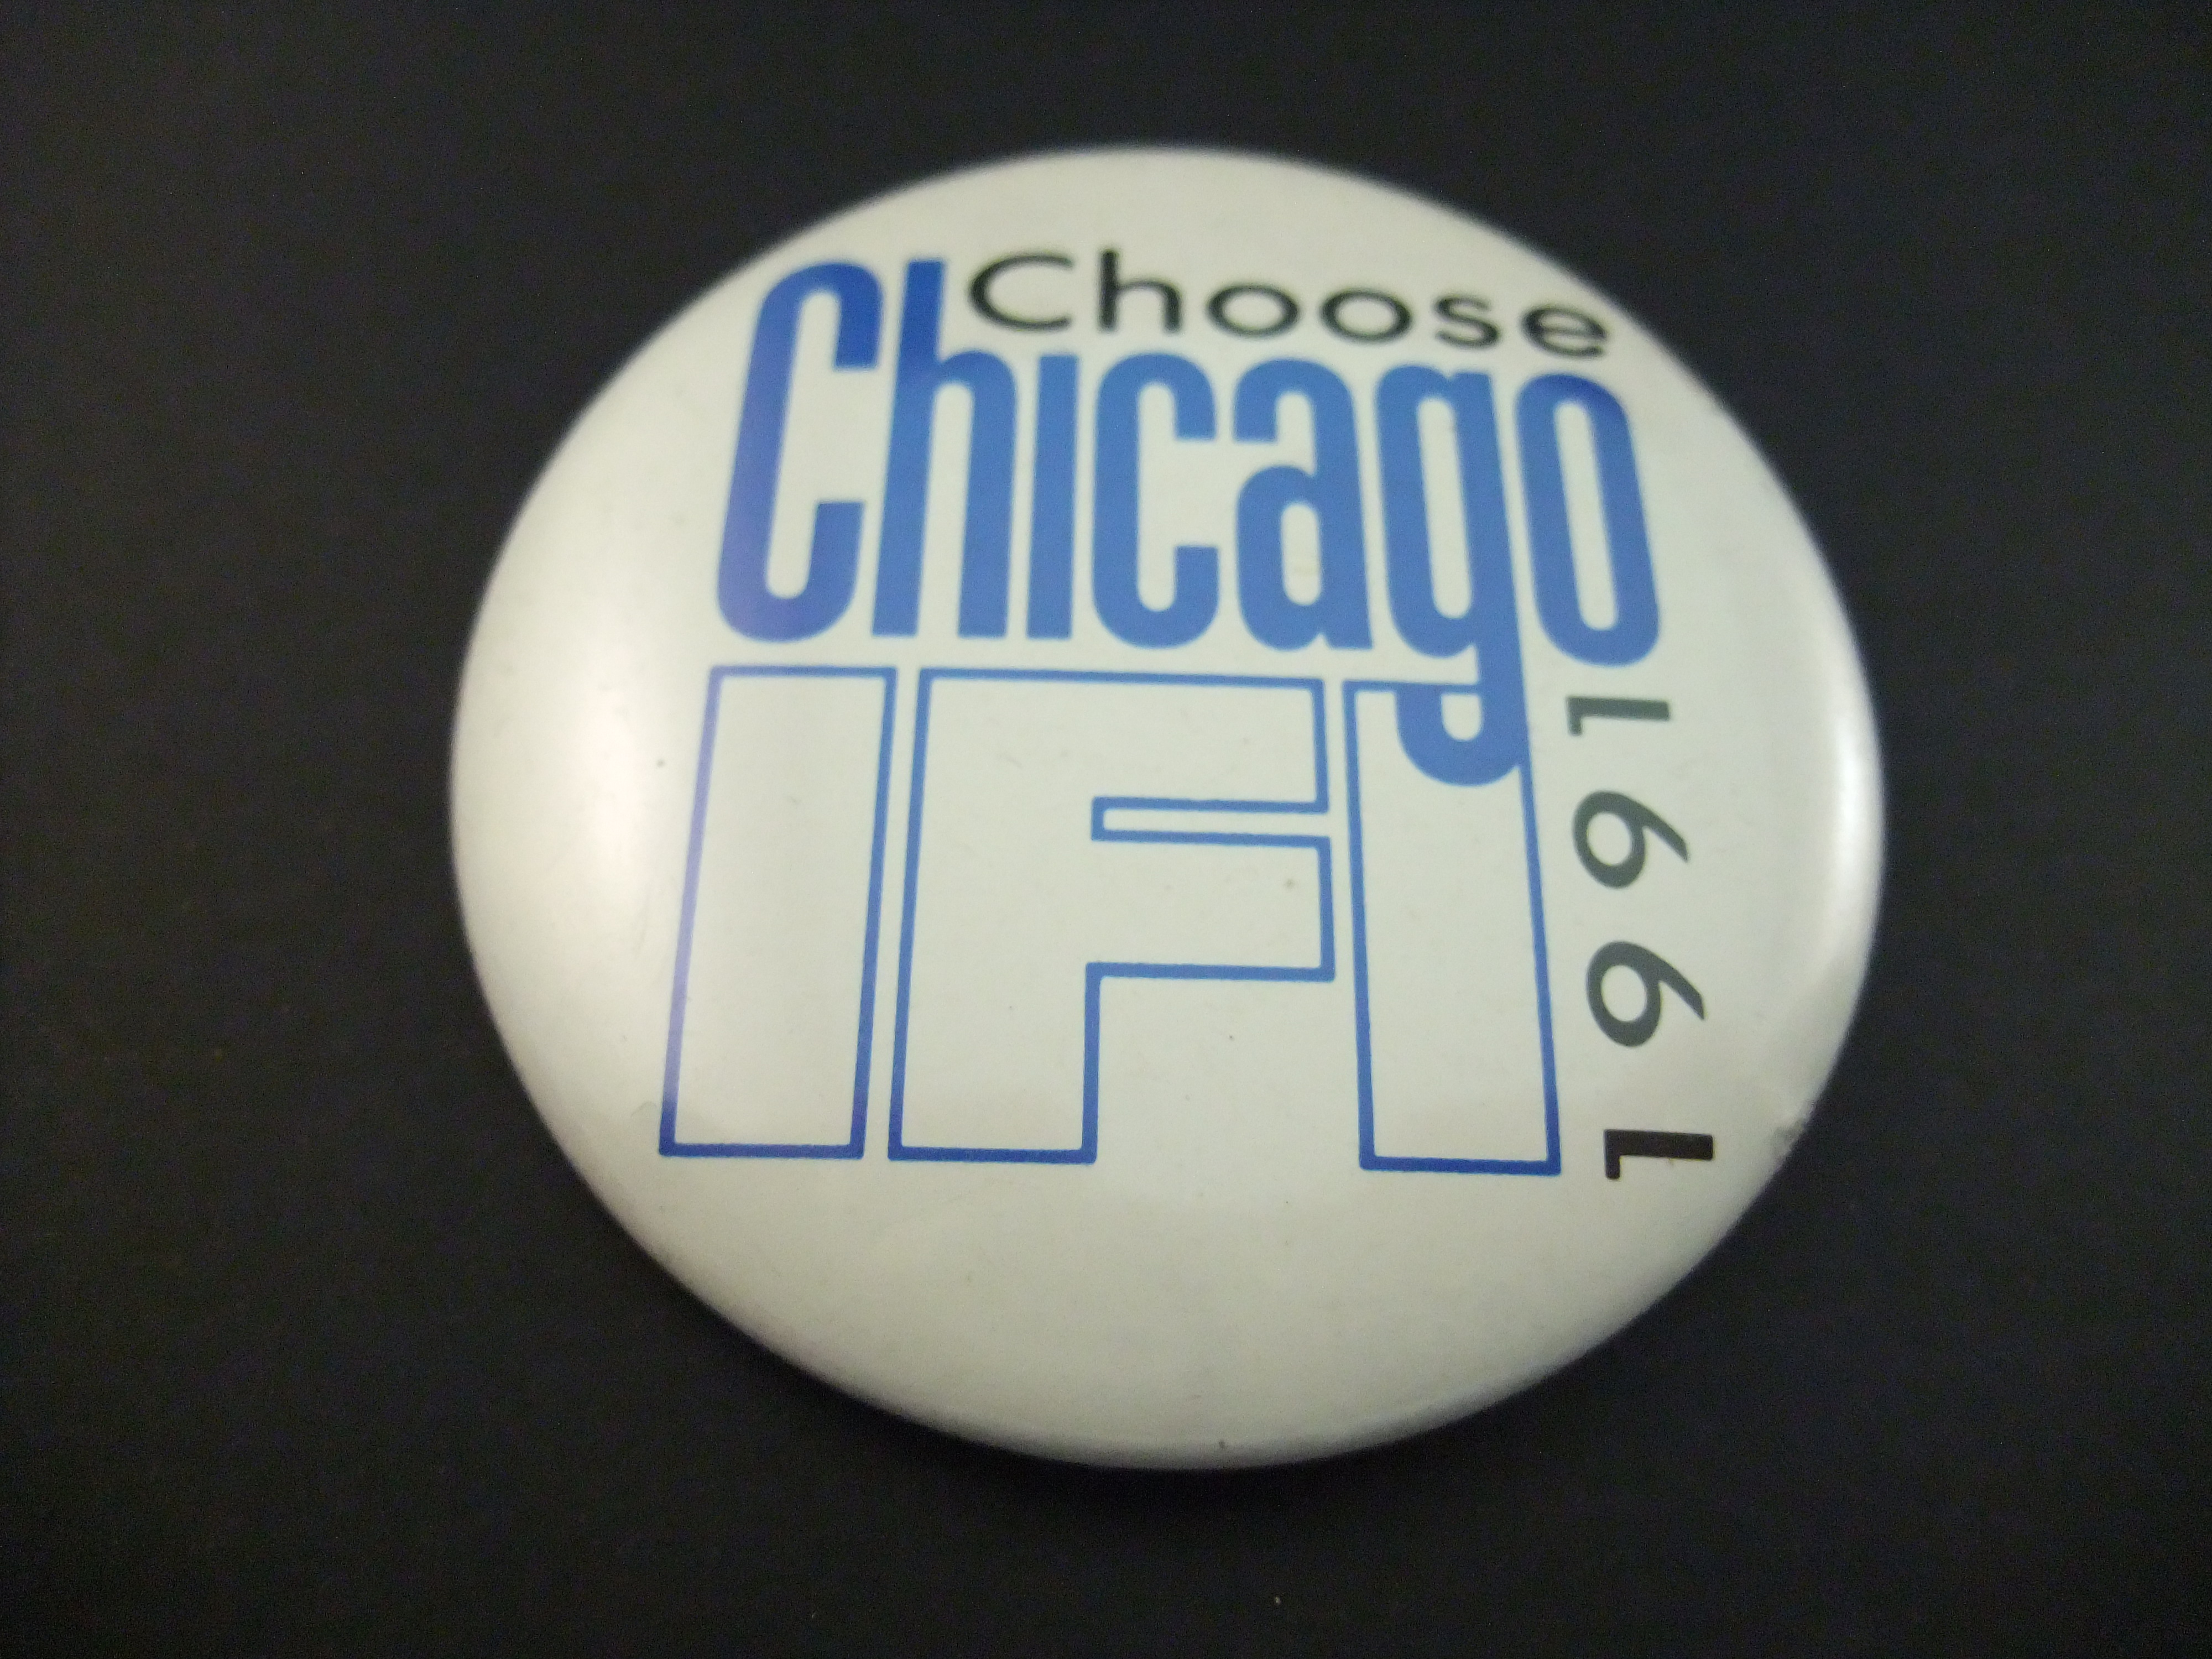 Choose Chicago IFI 1991 onbekend